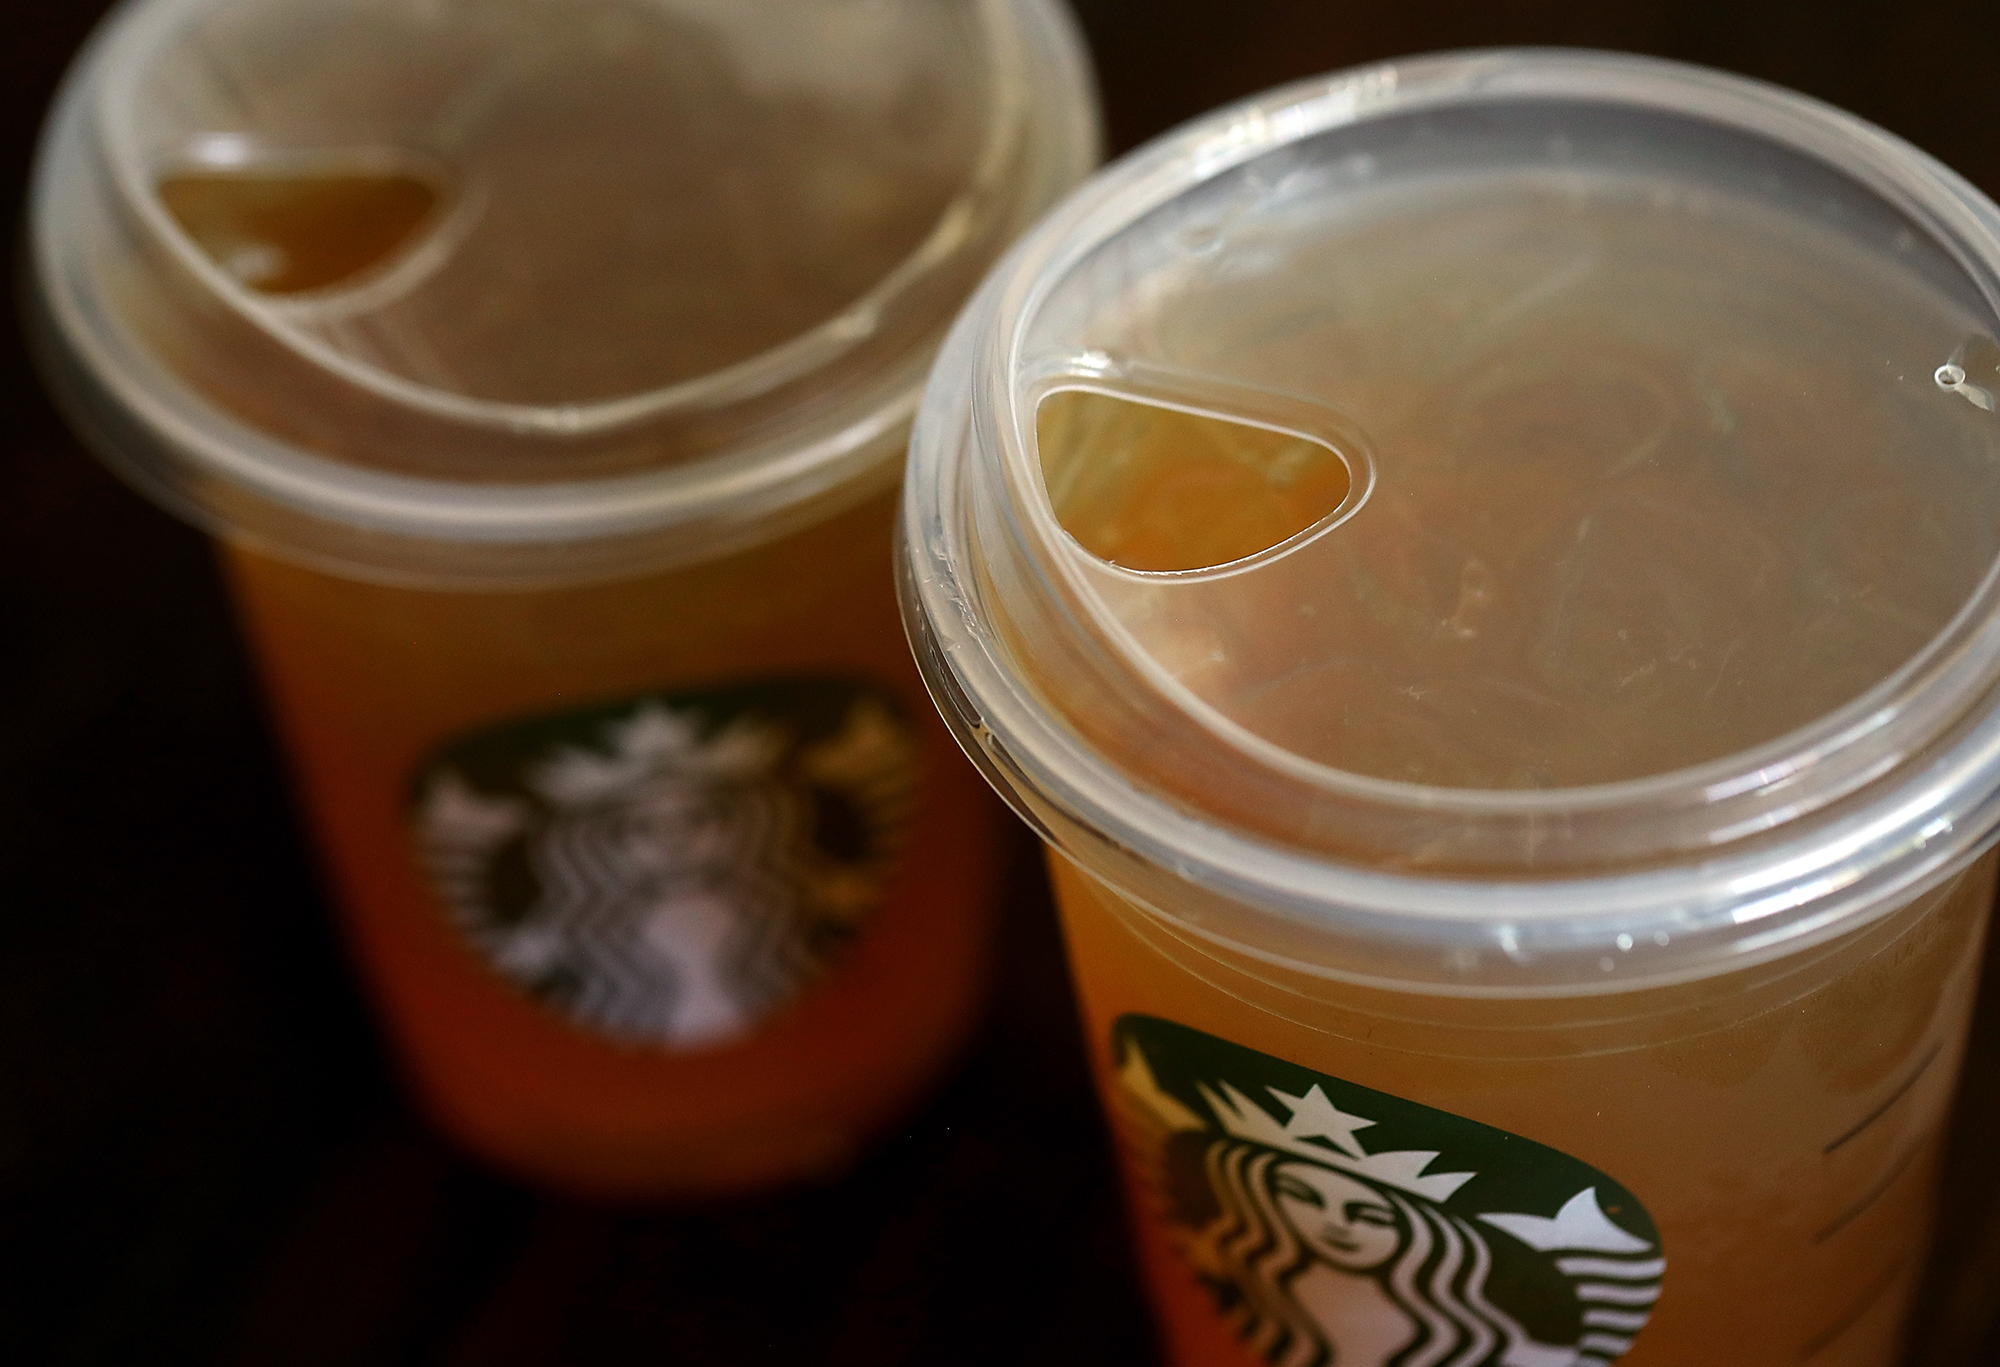 Starbucks to scrap plastic straws globally by 2020